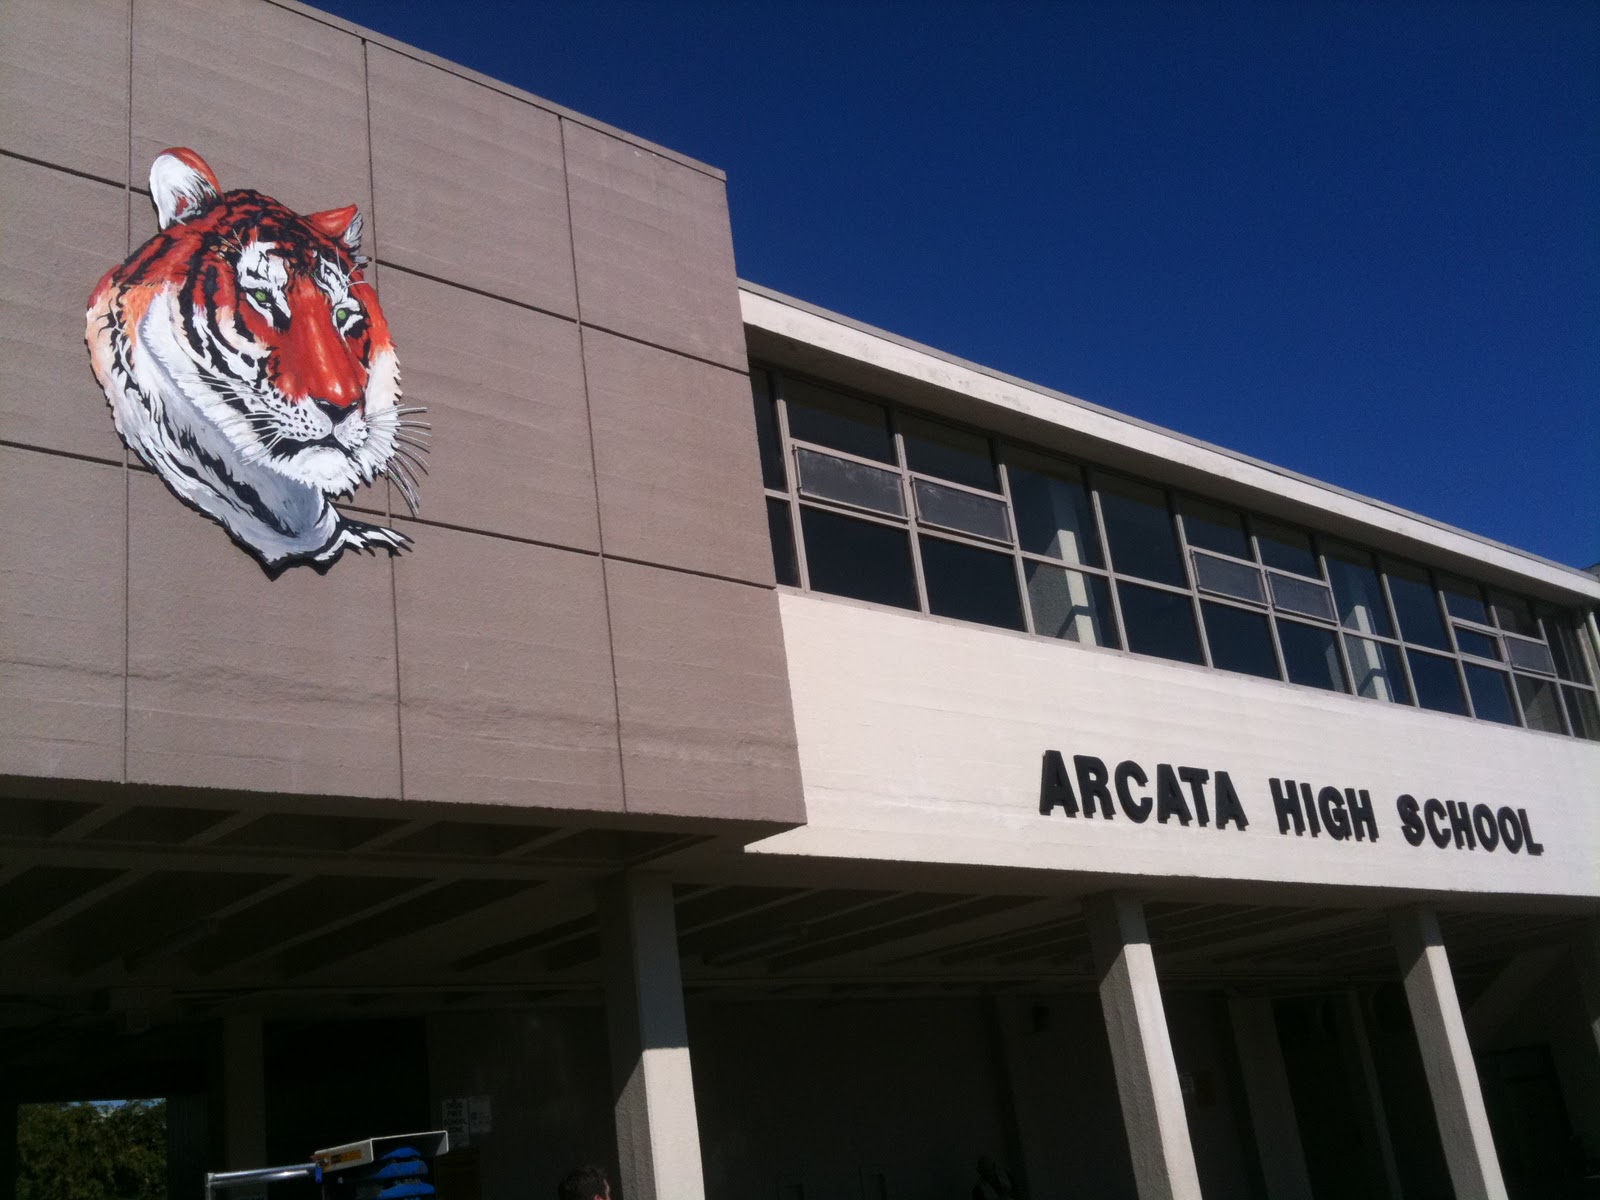 The Art of Donovan Clark: I painted the Arcata High School mascot/logo